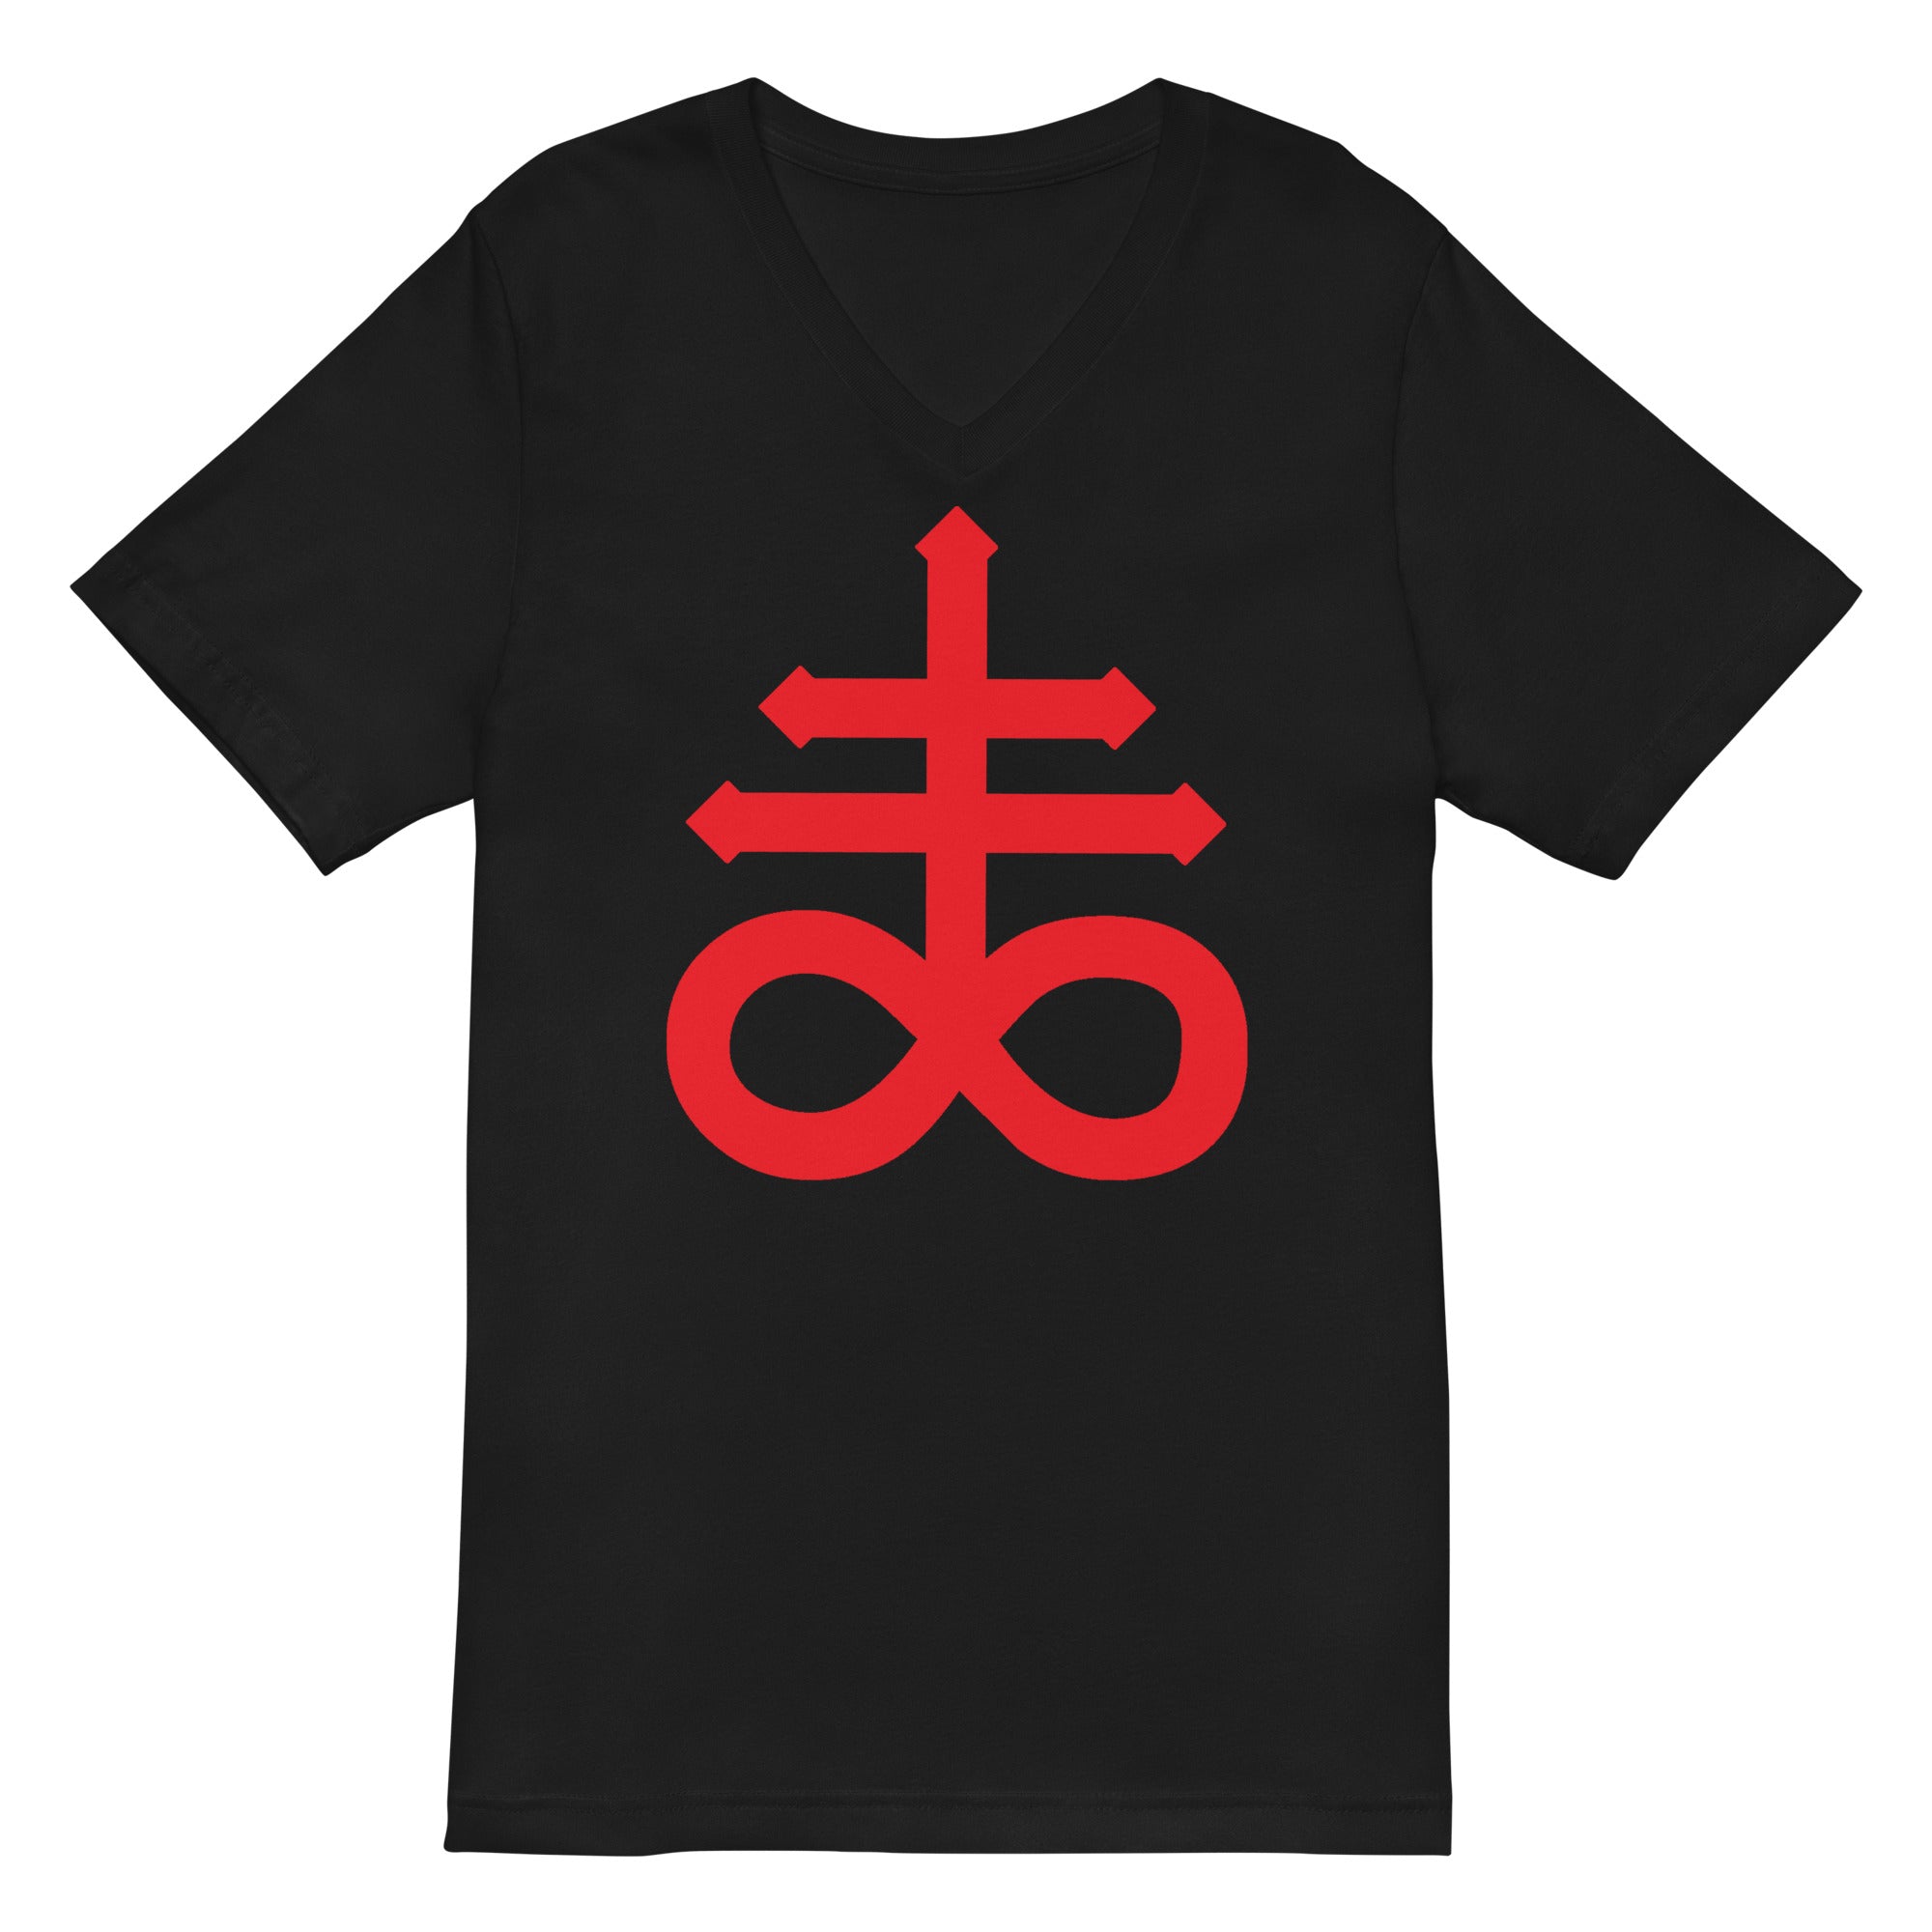 The Leviathan Cross of Satan Occult Symbol Women’s Short Sleeve V-Neck T-Shirt Red Print - Edge of Life Designs